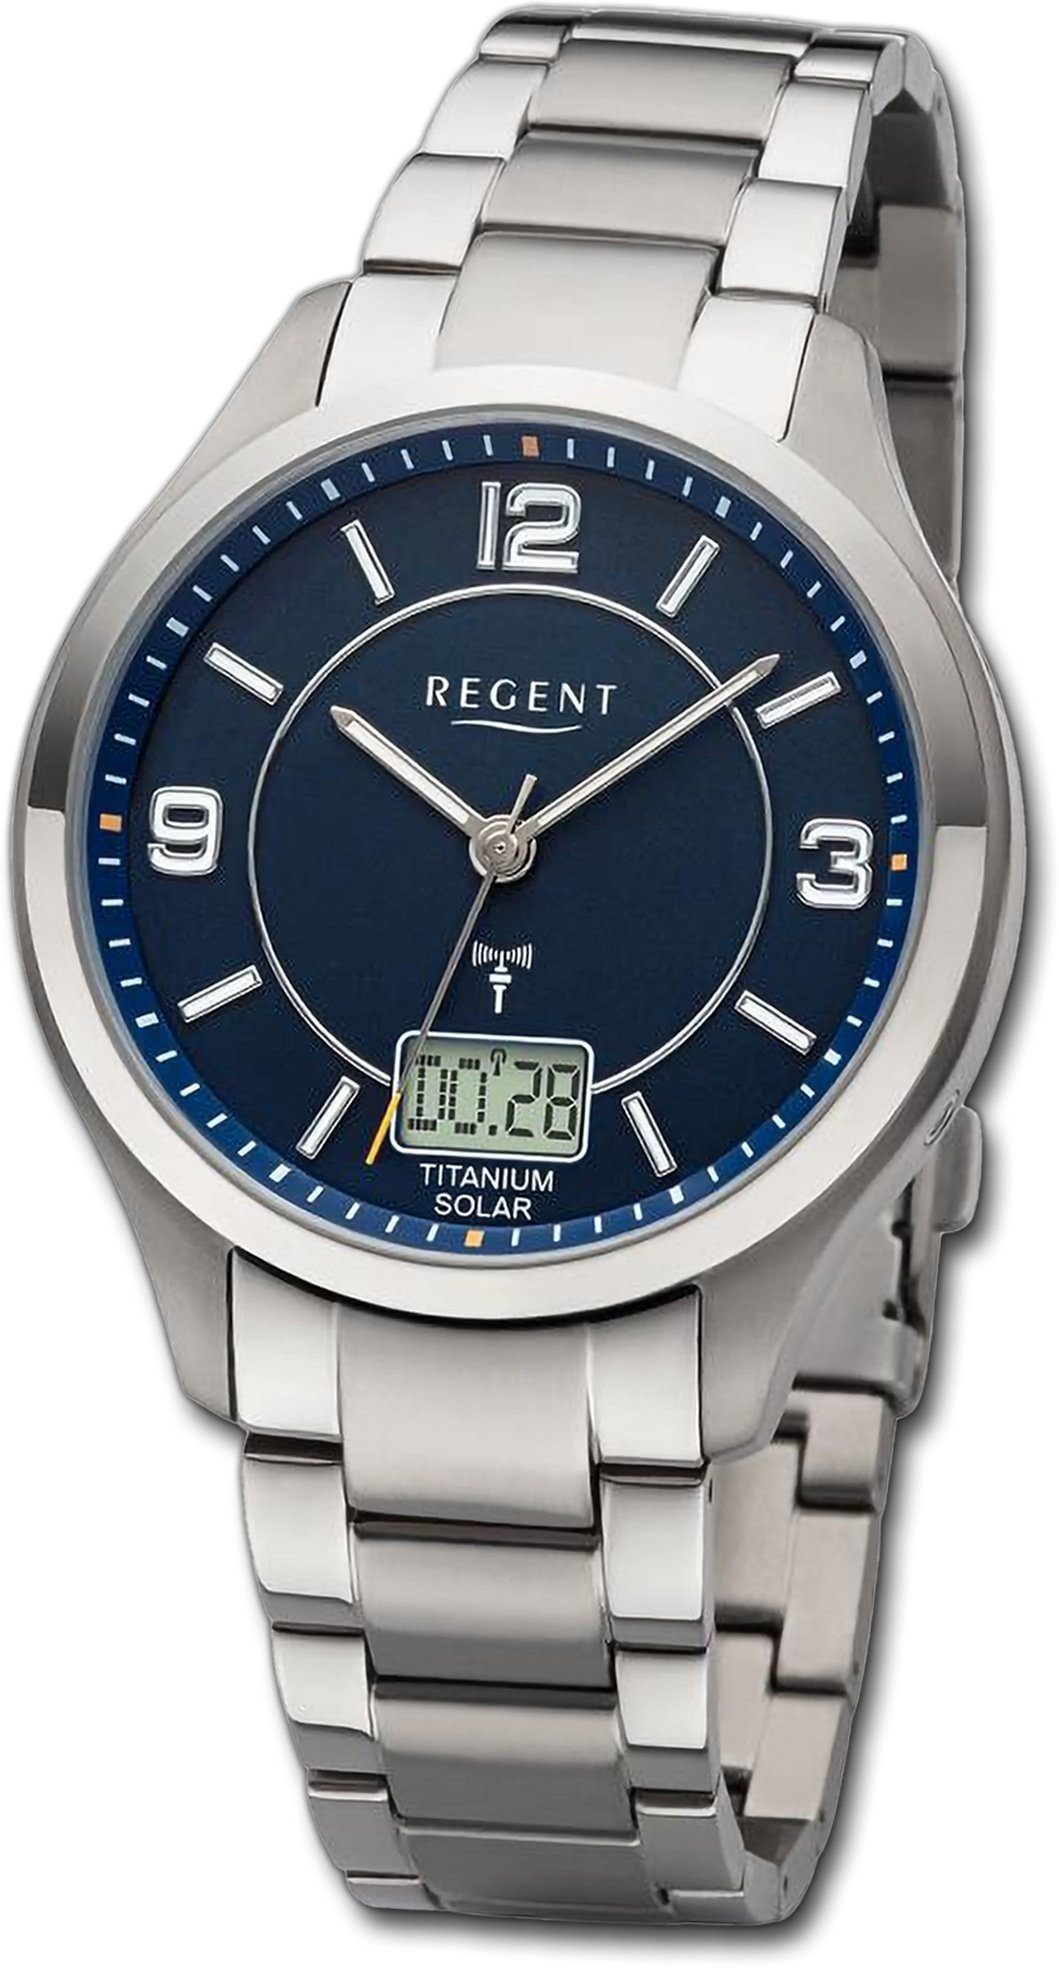 Regent Quarzuhr Regent Herren Armbanduhr Analog-Digital, Herrenuhr Metallarmband silber, rundes Gehäuse, extra groß (ca. 42mm)